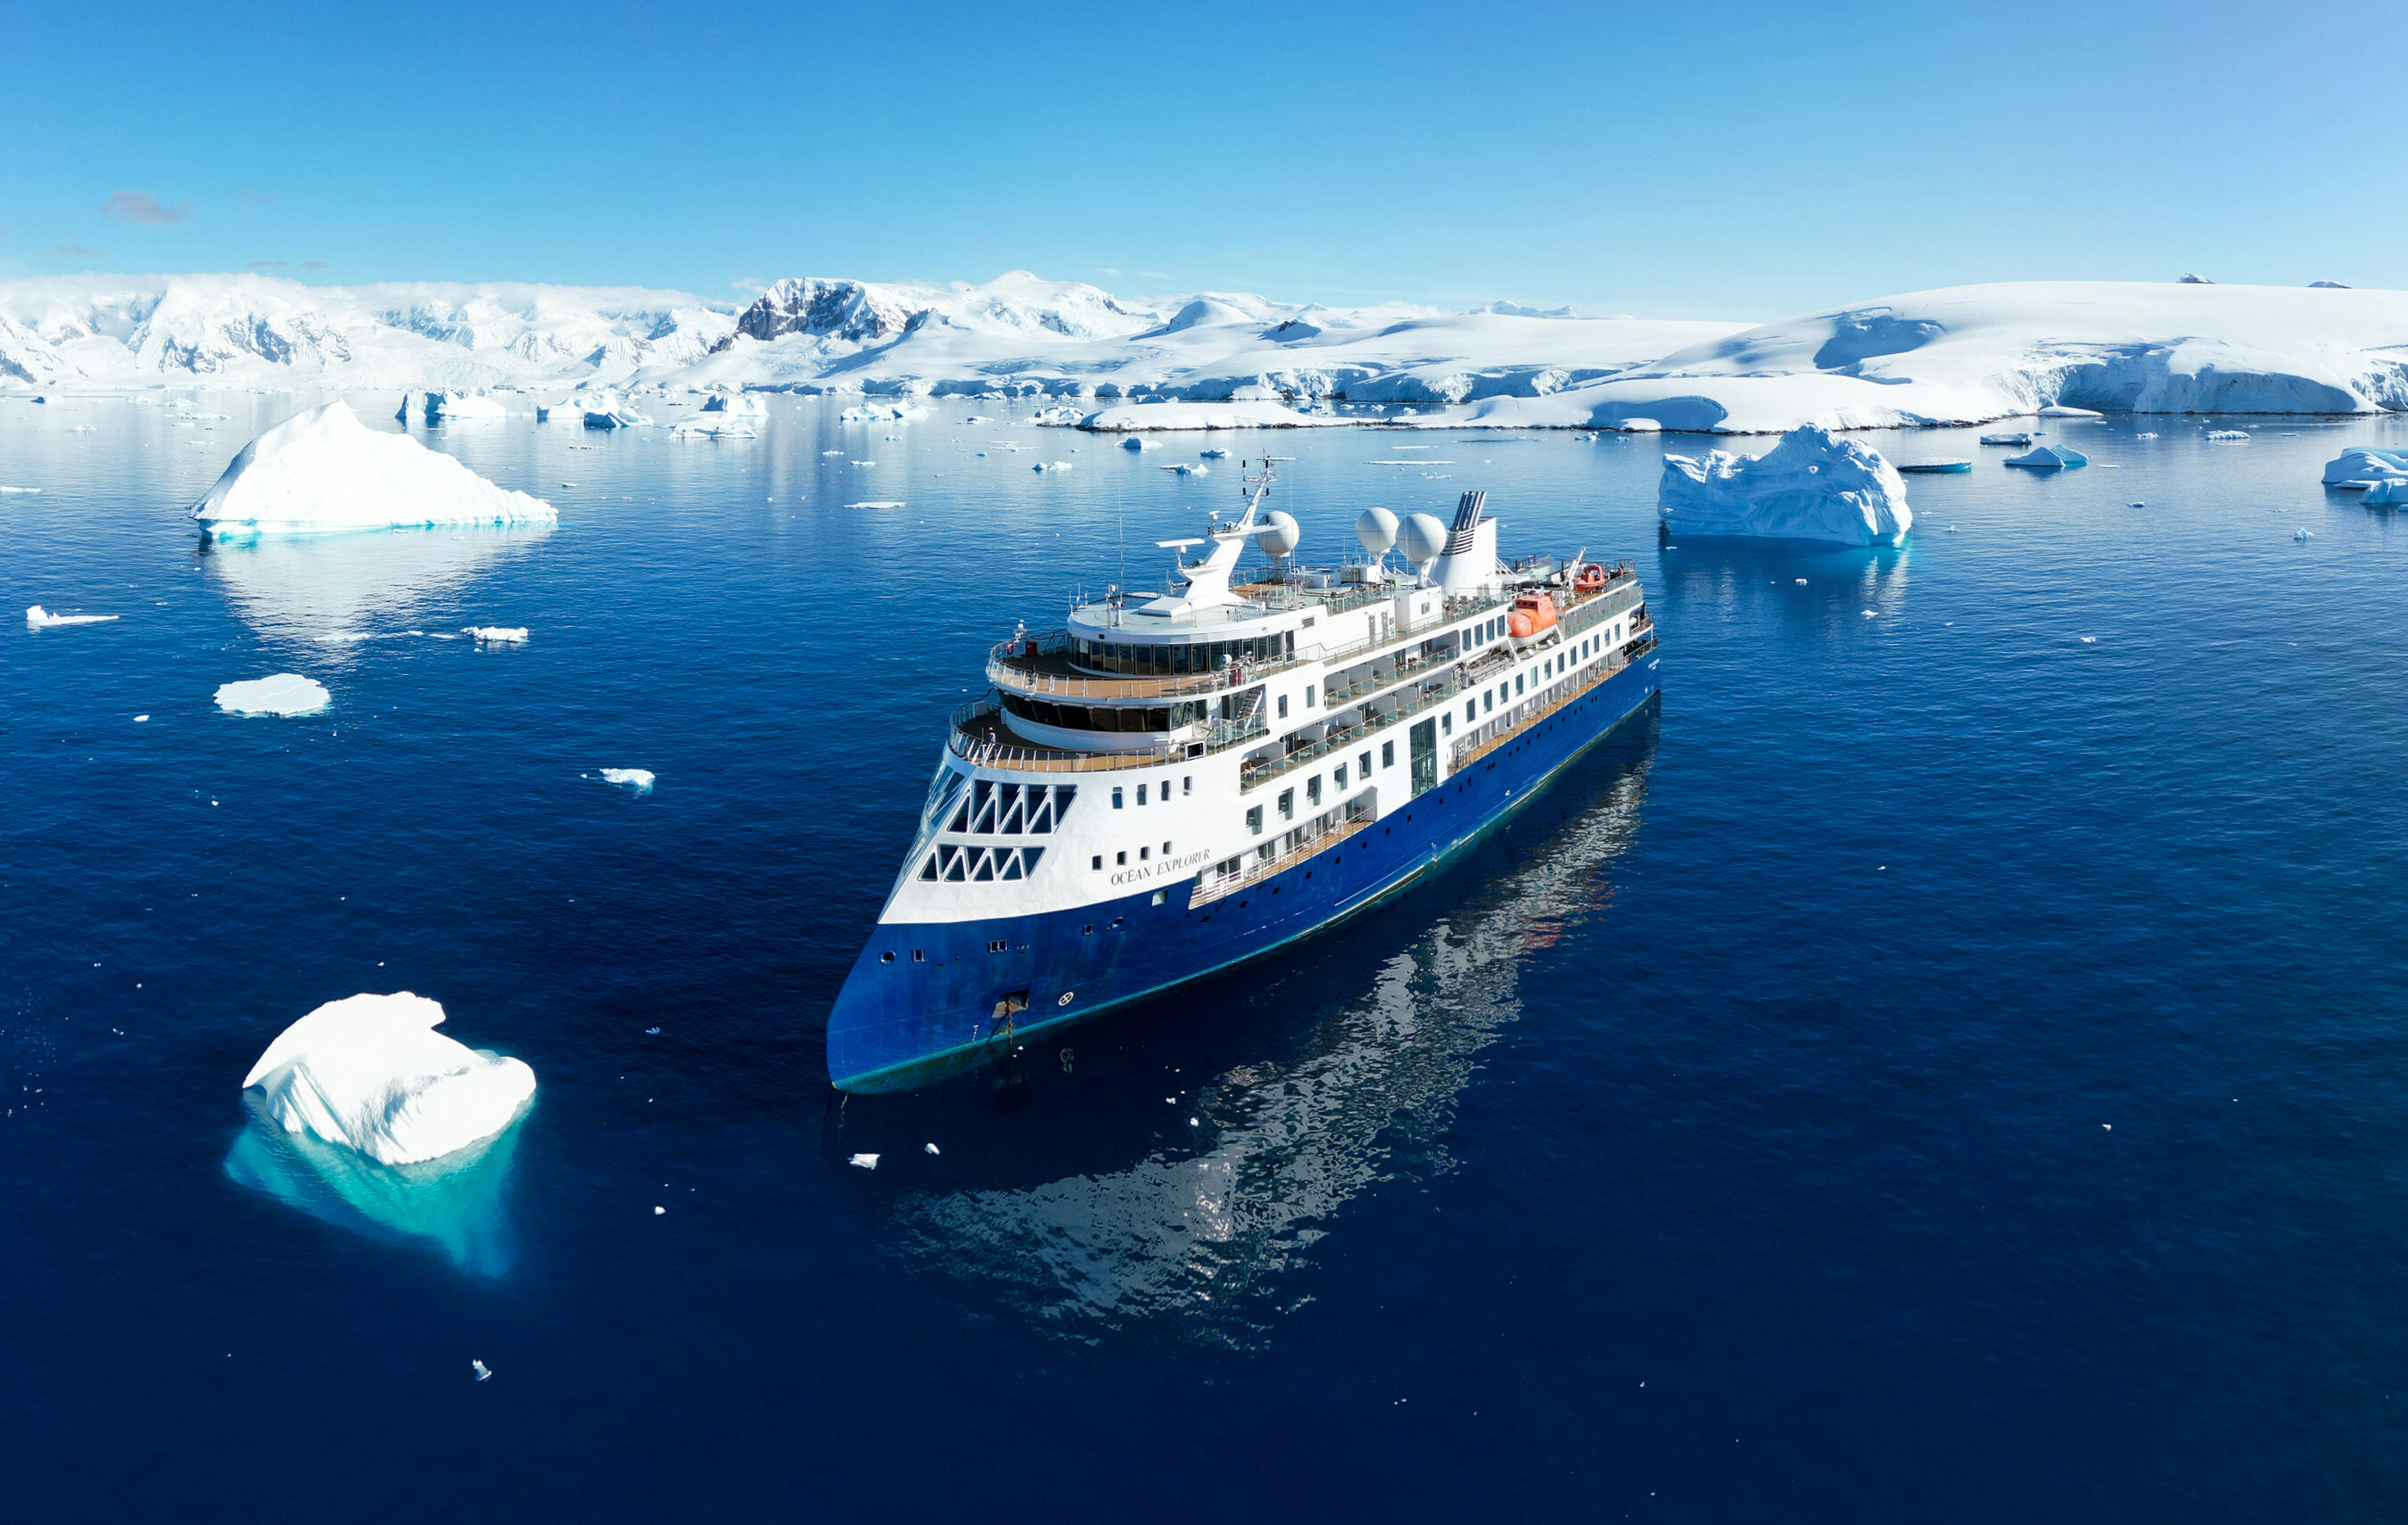 Quark Expeditions Introduces M/V Ocean Explorer to its Polar Fleetv